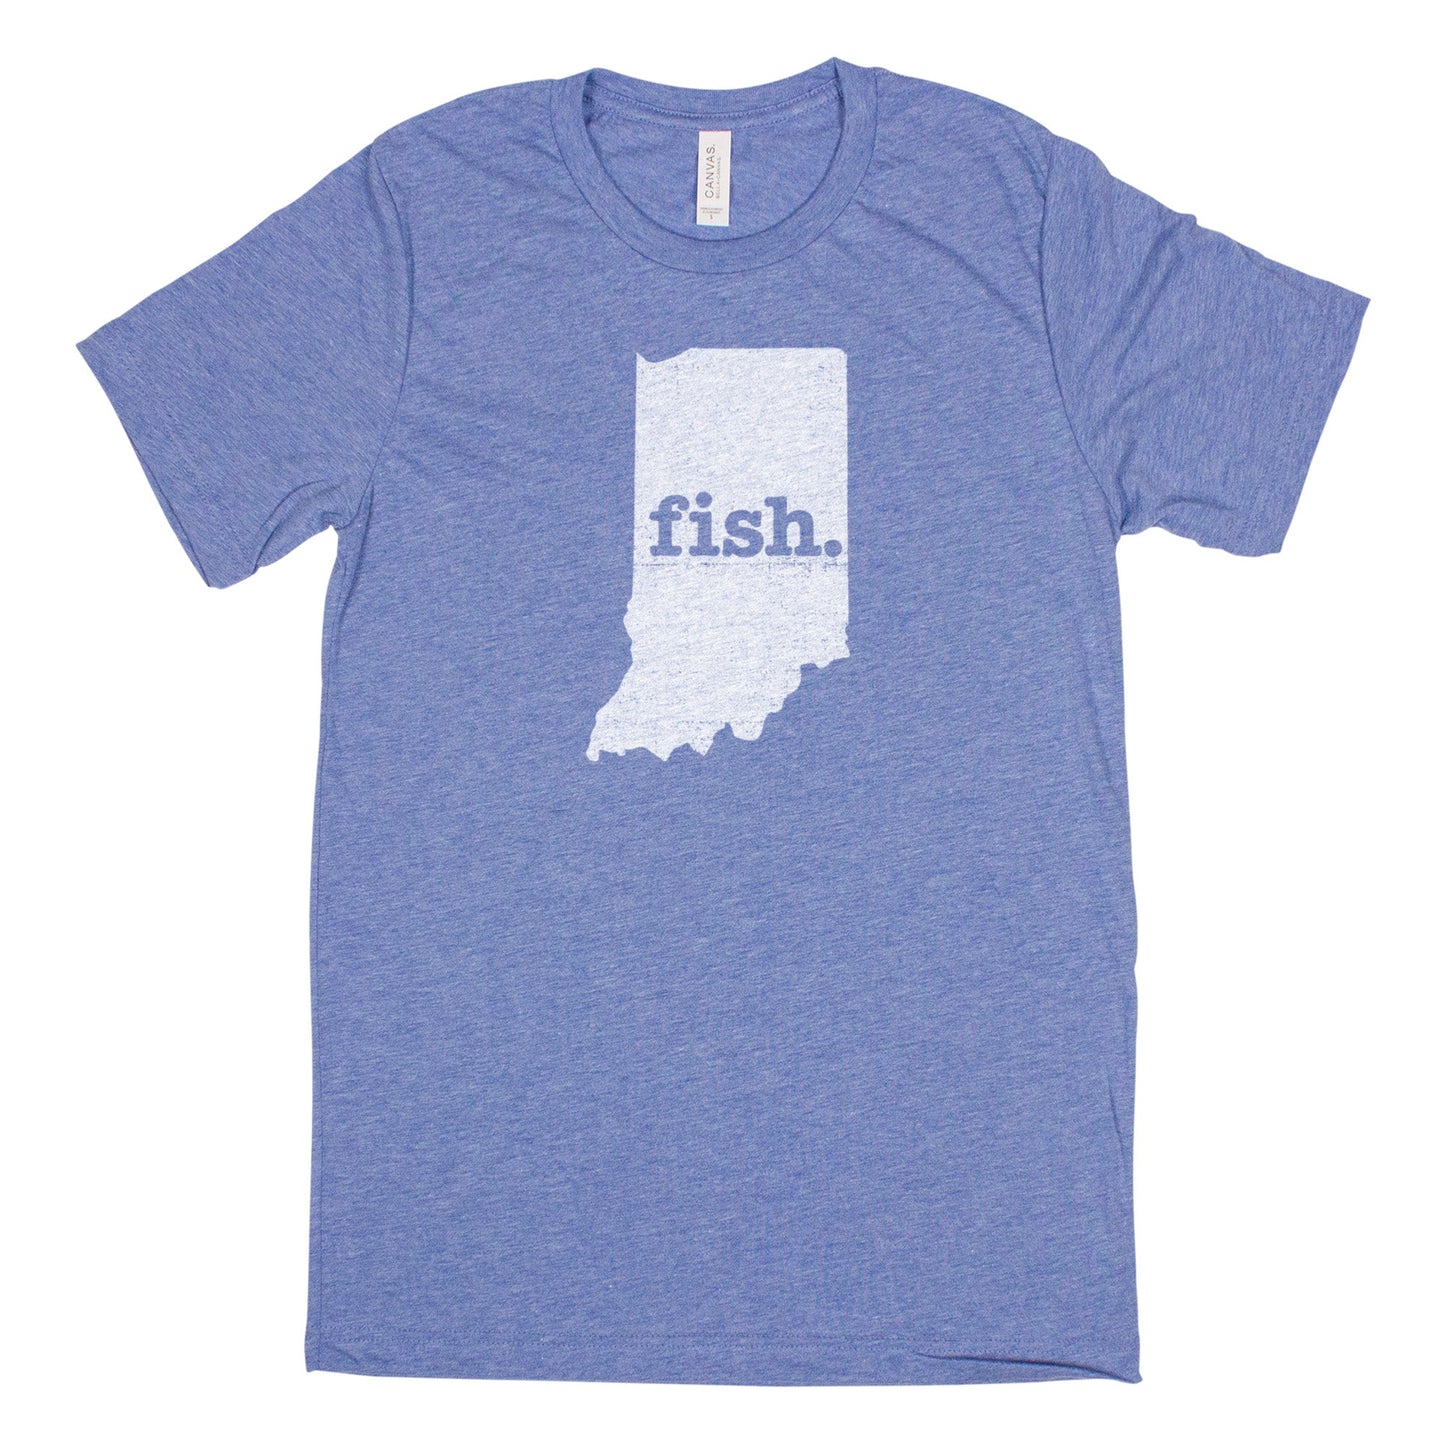 fish. Men's Unisex T-Shirt - Indiana